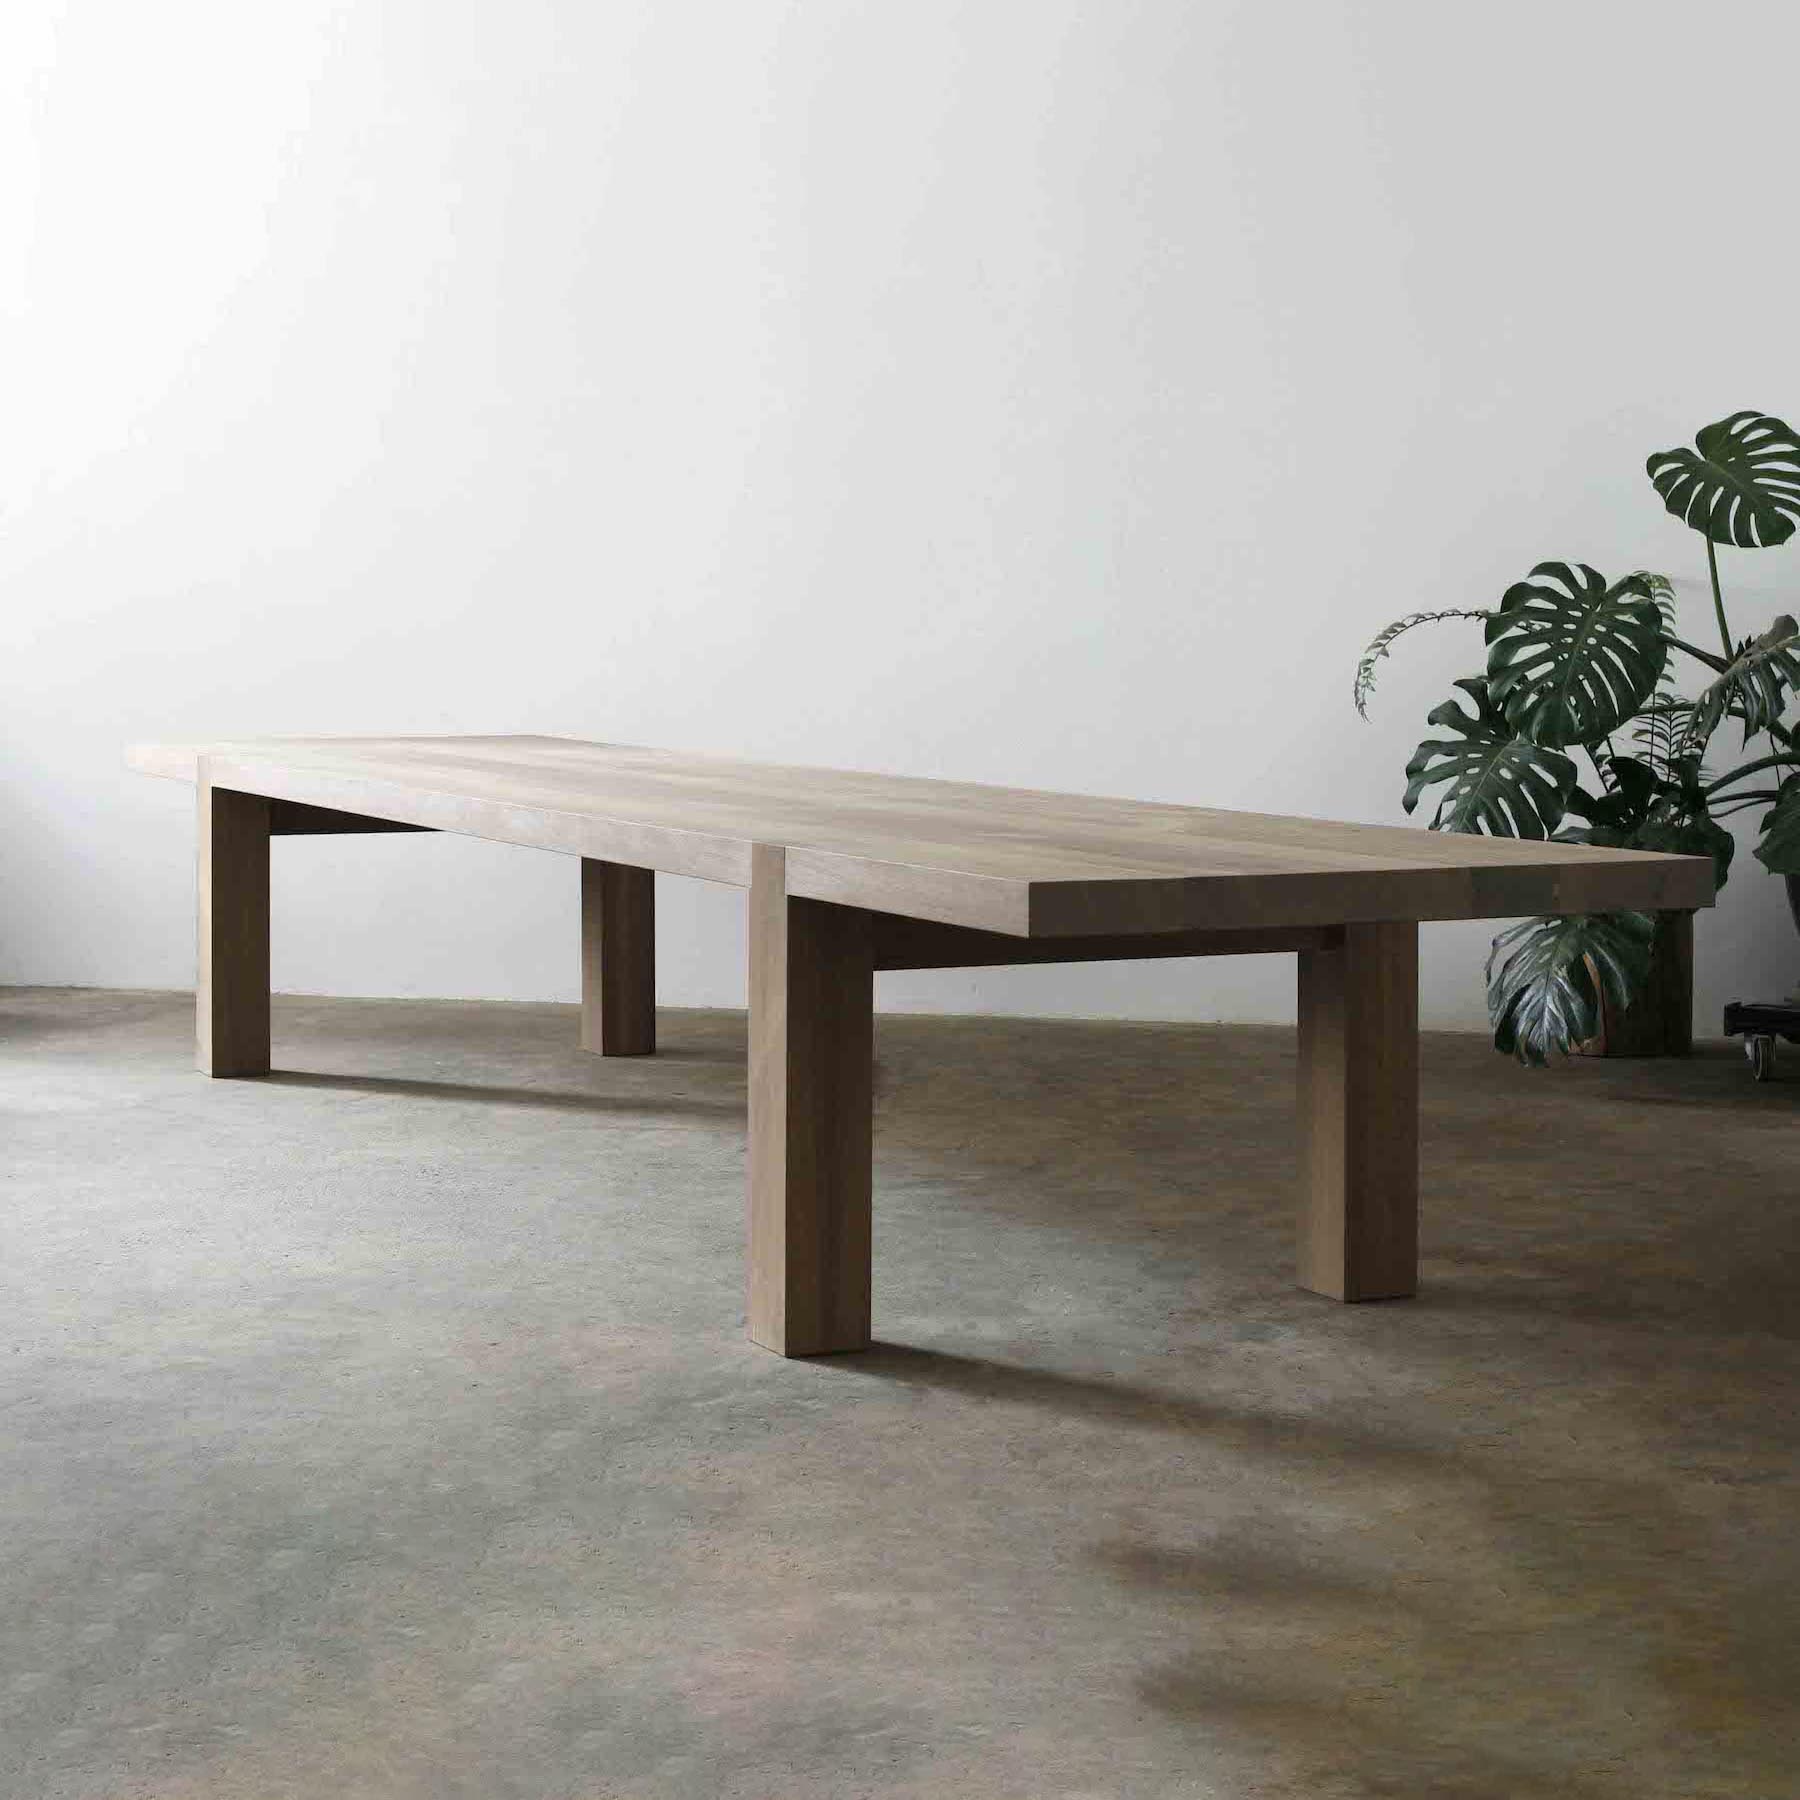 Carpenters-table2.jpg